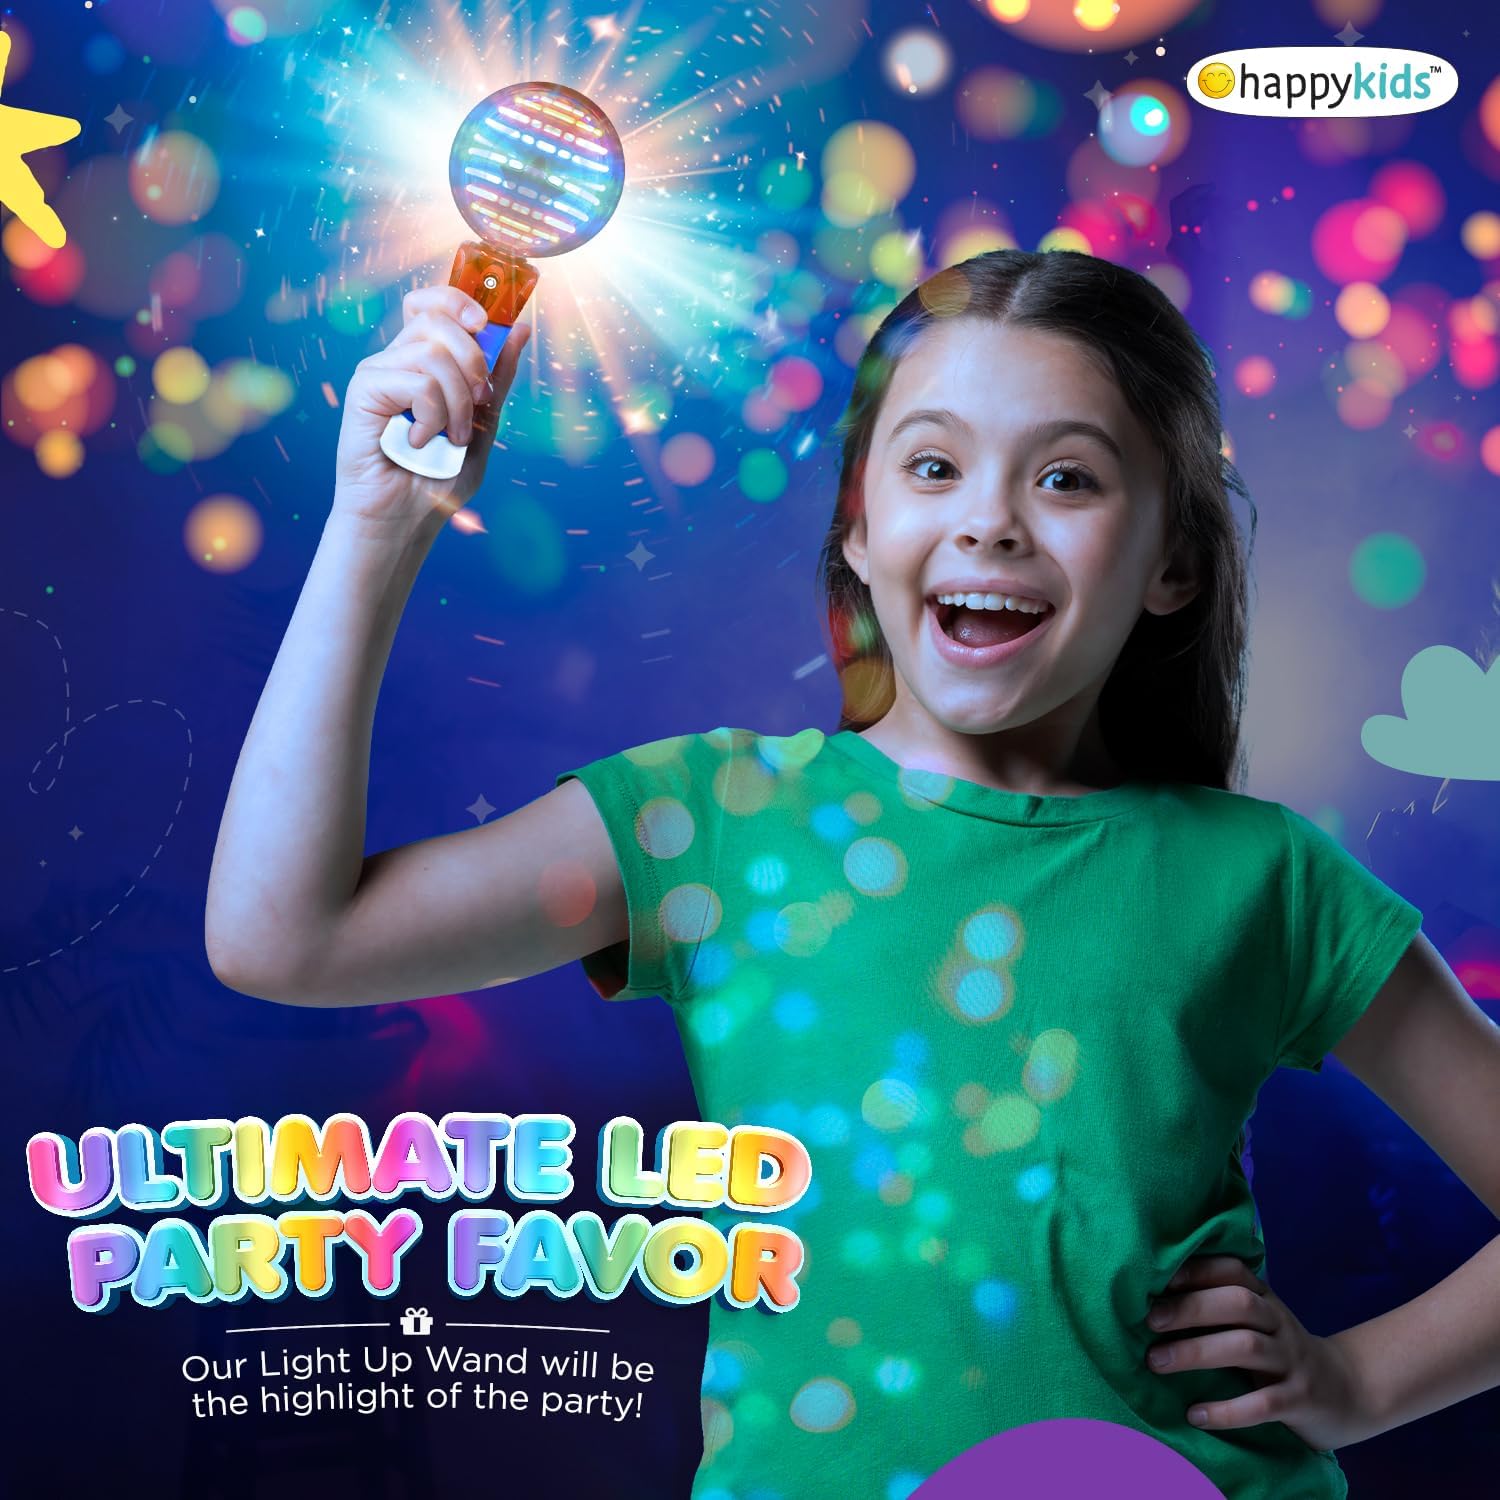 SAILEROAD Kids Magic Light Toys Luminous Light Pen Glow In The